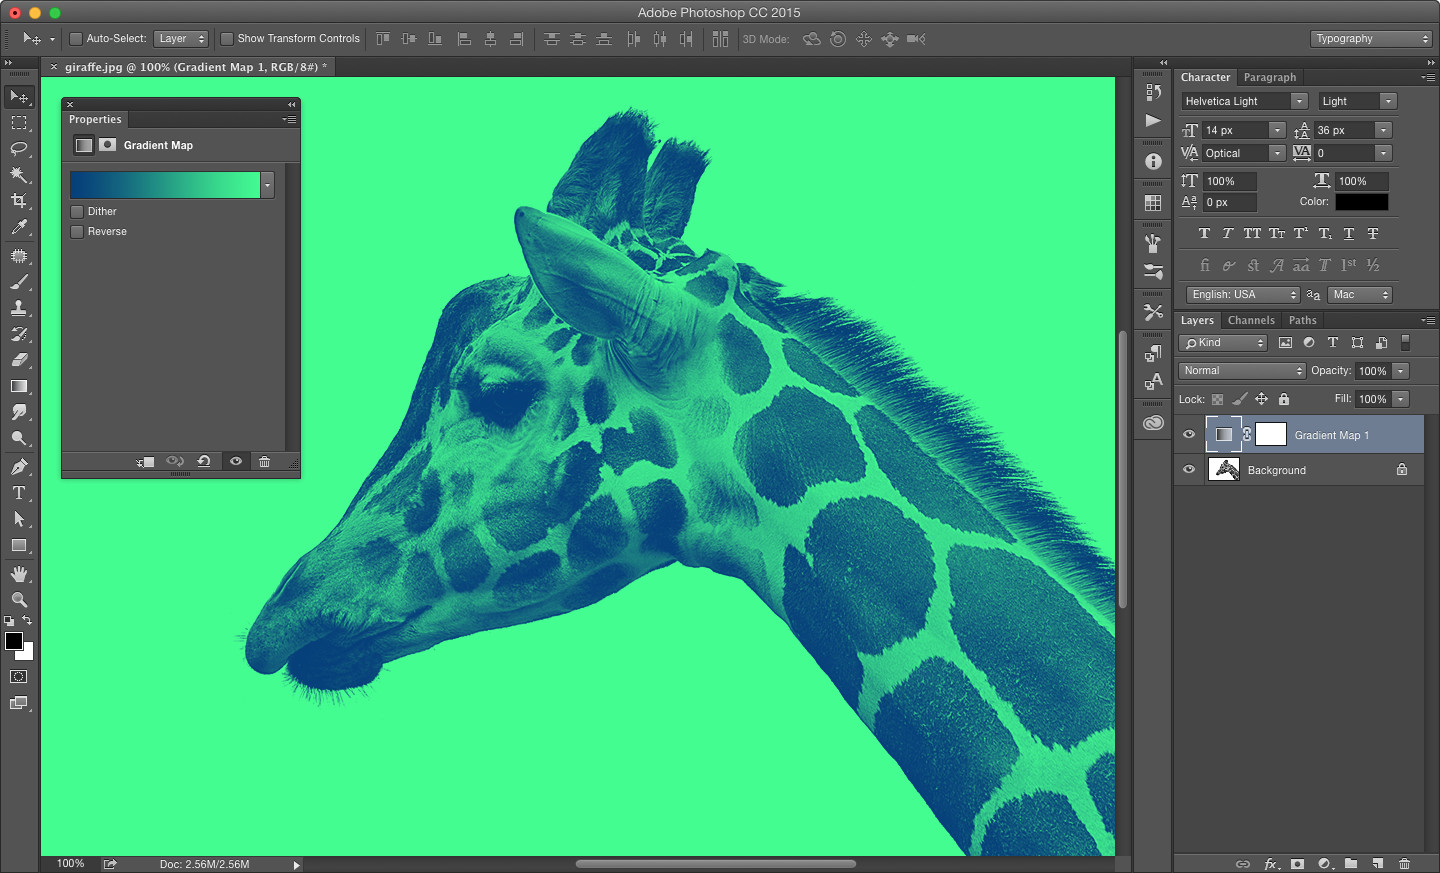 A giraffe edited on a photoshop